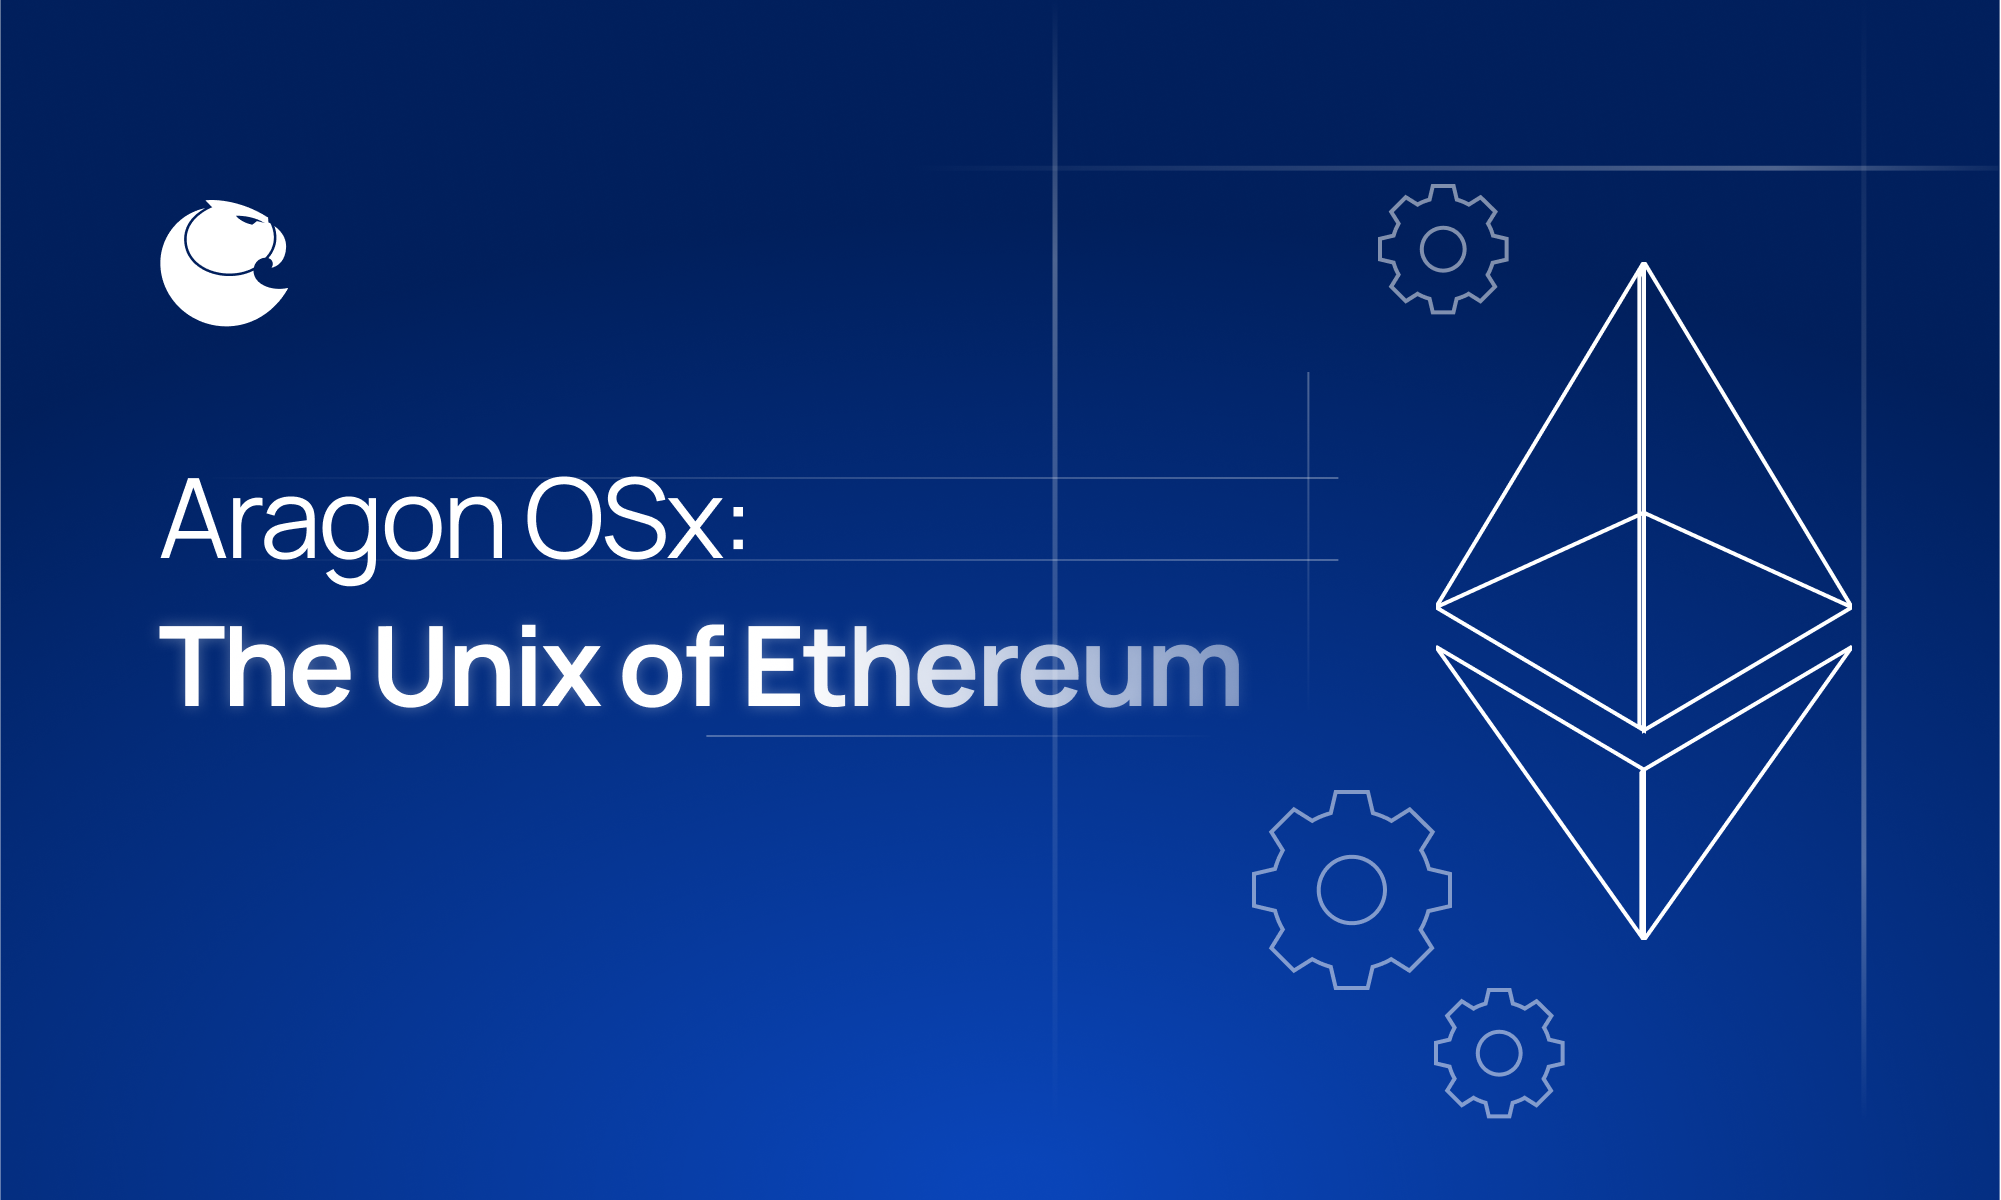 aragon-osx:-the-unix-of-ethereum